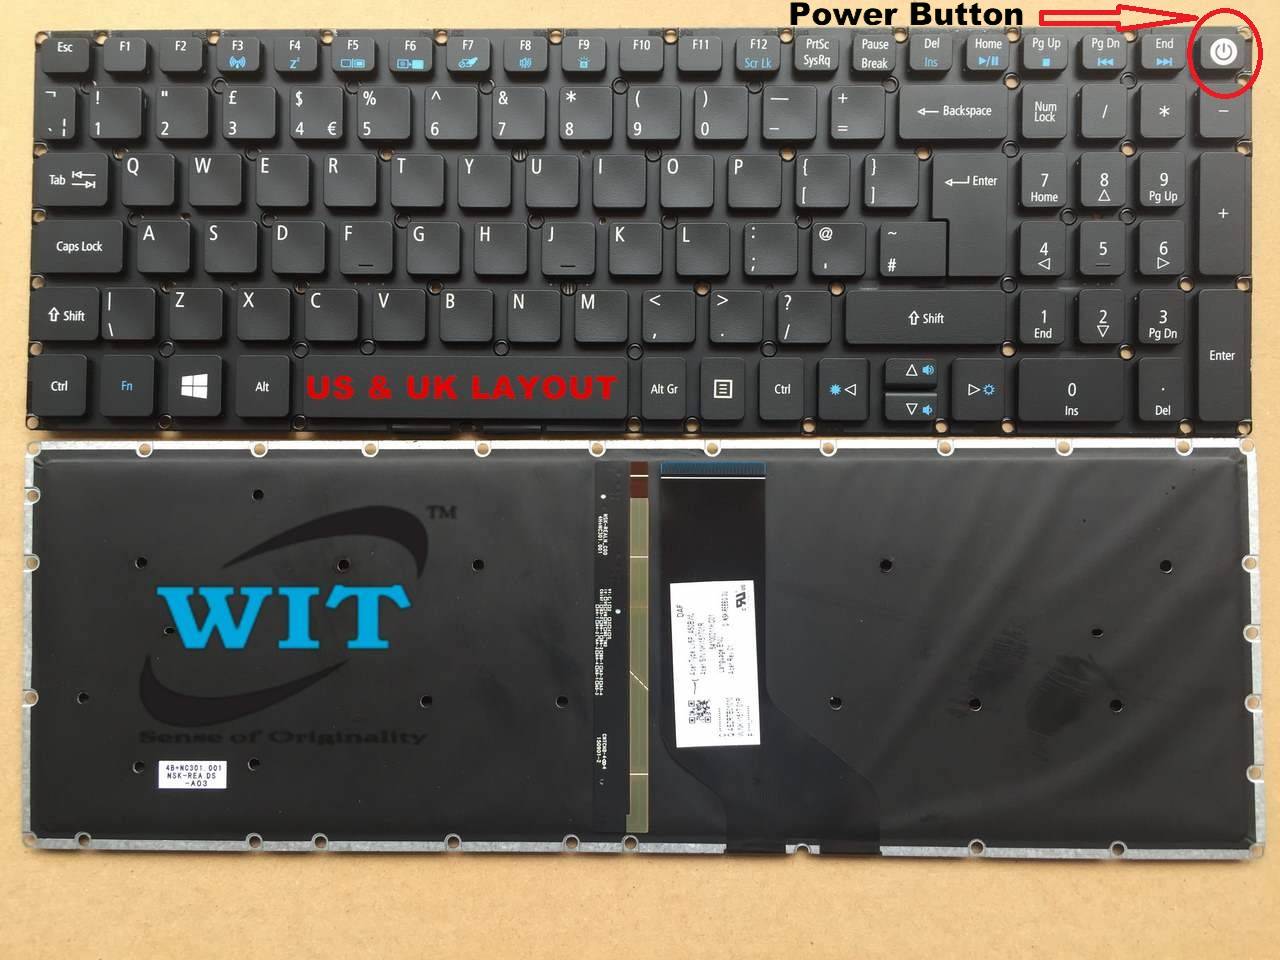 Rainbow Keyboard Cover 15.6 Inch Compatible Acer Aspire E15 E5-575 E5-575G E5-576G E5-574G E5-573 E5-532 E5-772 Acer Aspire A315 A715 Acer Aspire V15 V17 VN7-592G VN7-792G F5-571 F5-573G 